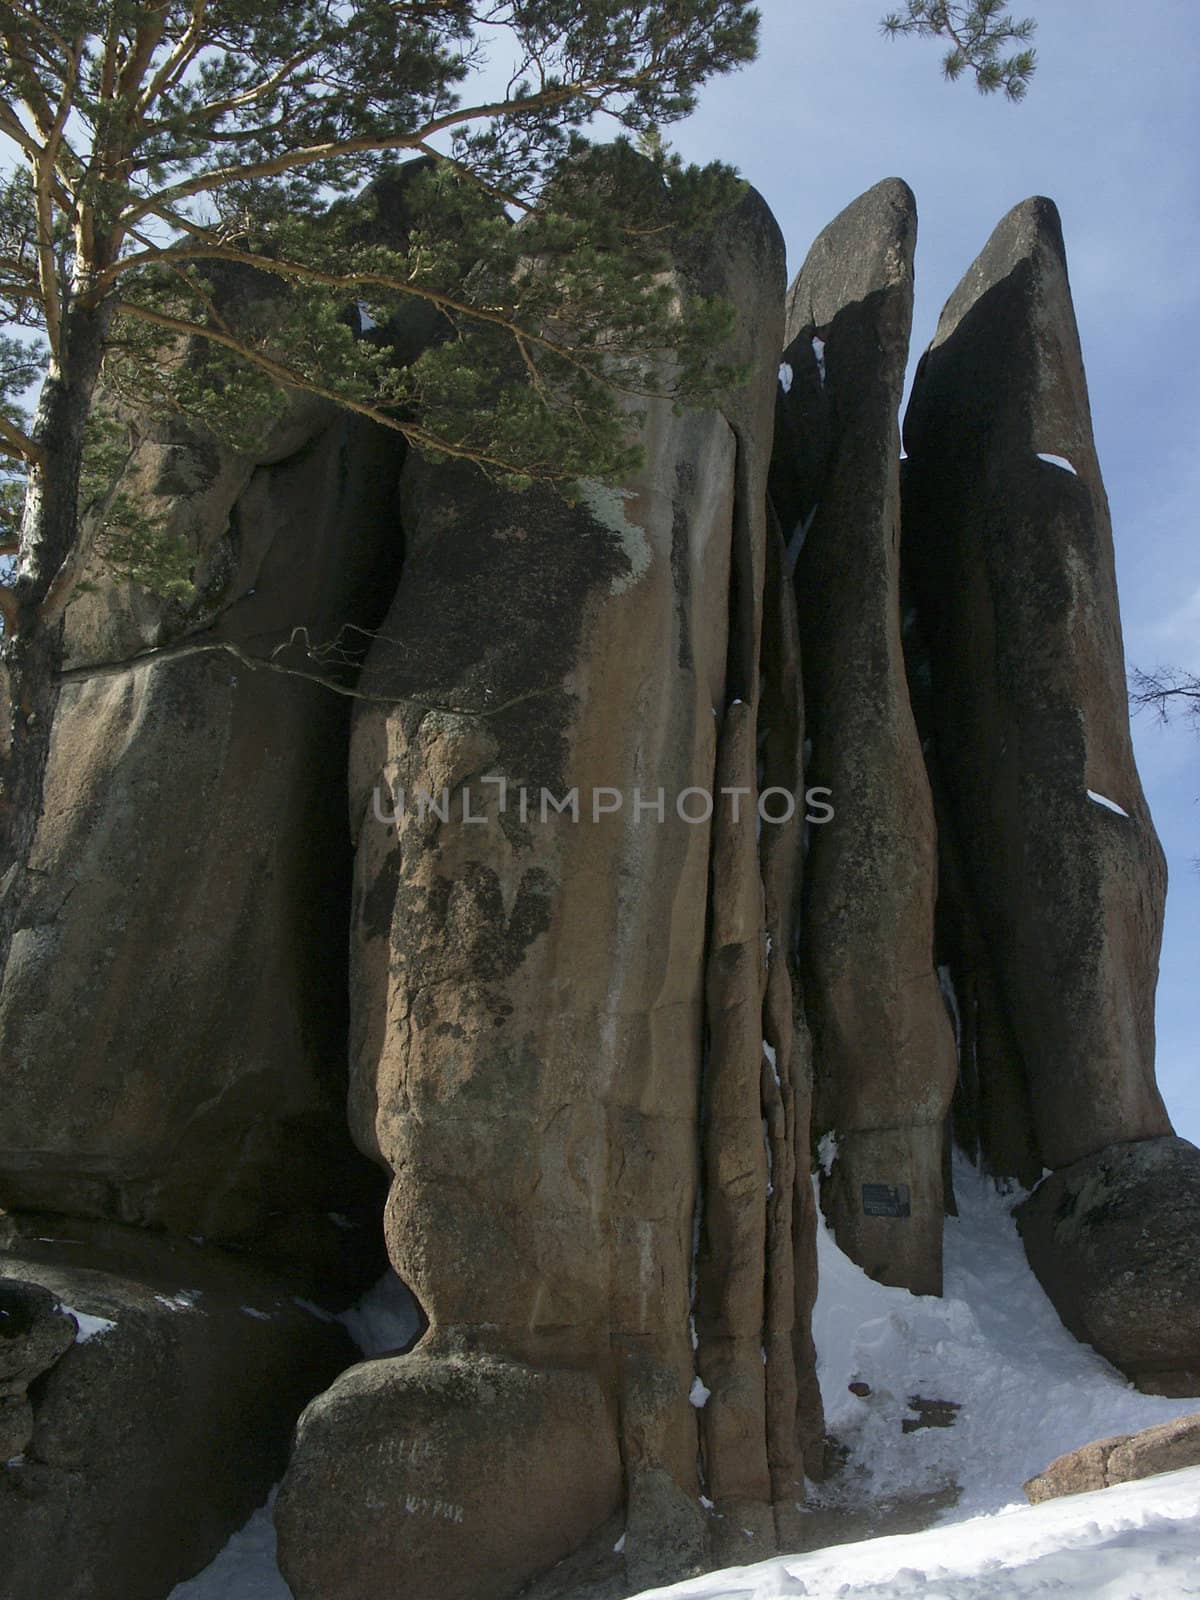 Minolta DSC. Rocks "Feathers" in national reserve "Columns" in Krasnoyarsk